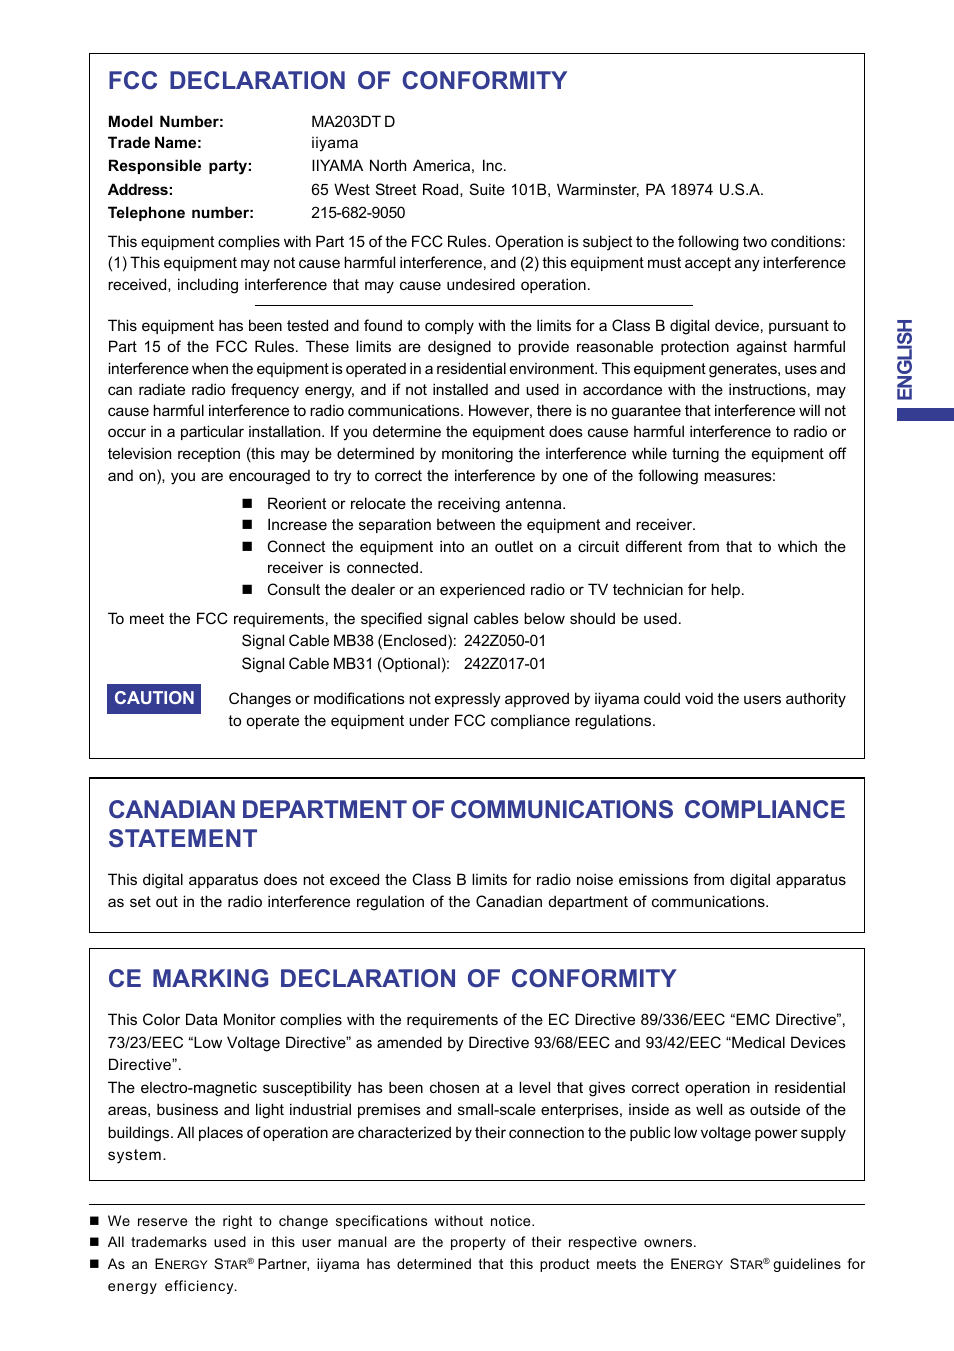 Fcc declaration of conformity, Ce marking declaration of conformity, English | Iiyama MA203DT D User Manual | Page 3 / 21